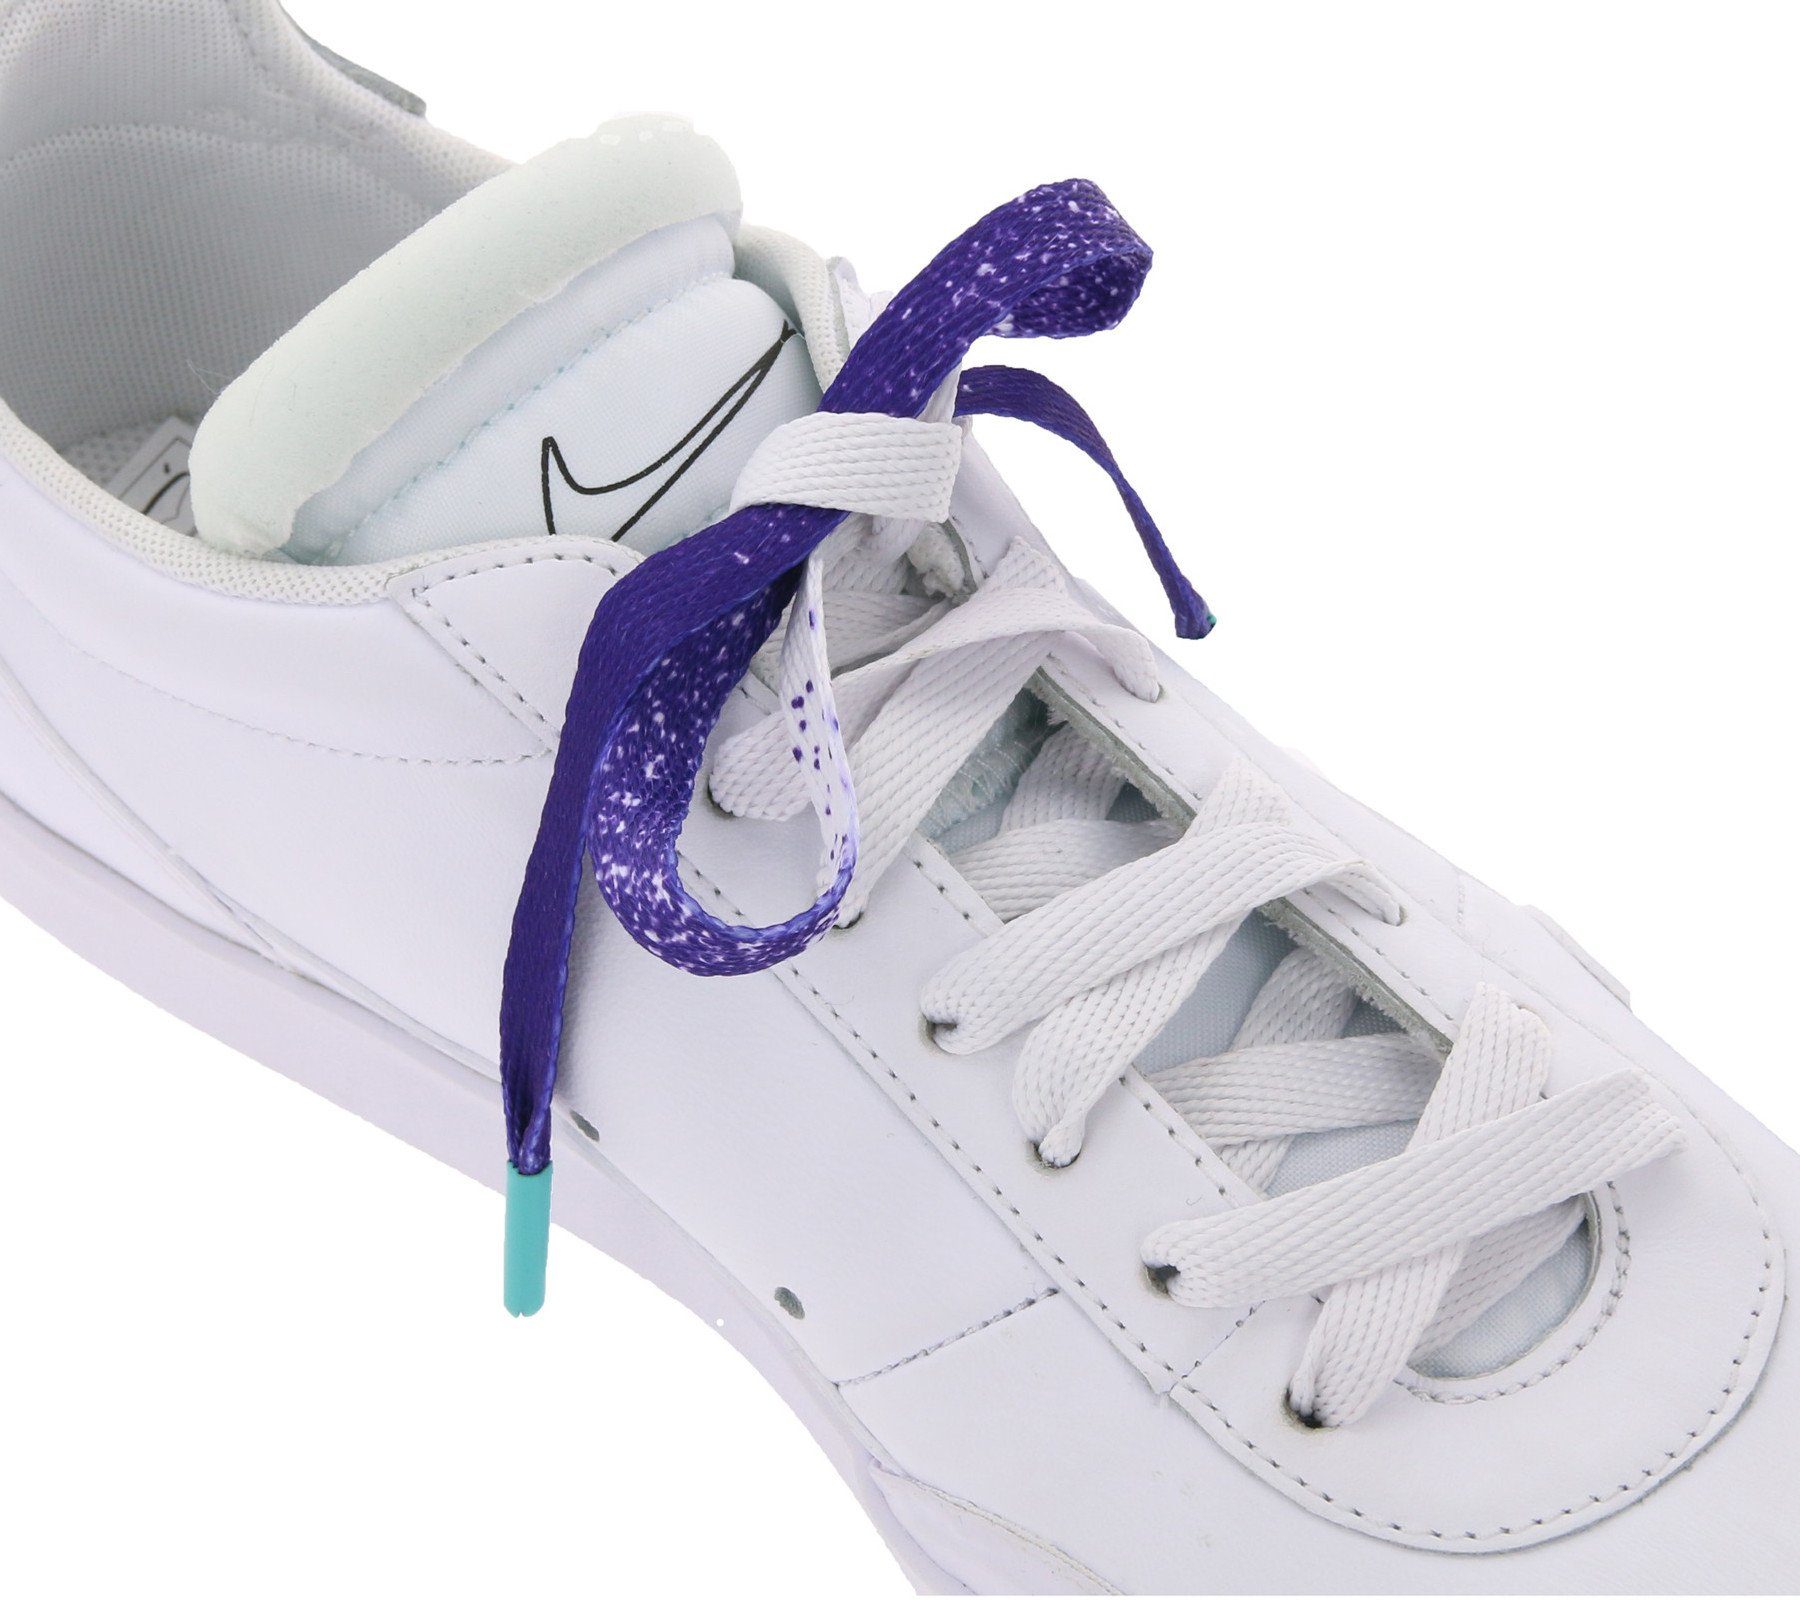 Tubelaces Schnürsenkel TubeLaces Schuhe Schnürbänder stylische Schnürsenkel Schuhbänder Violett/Weiß